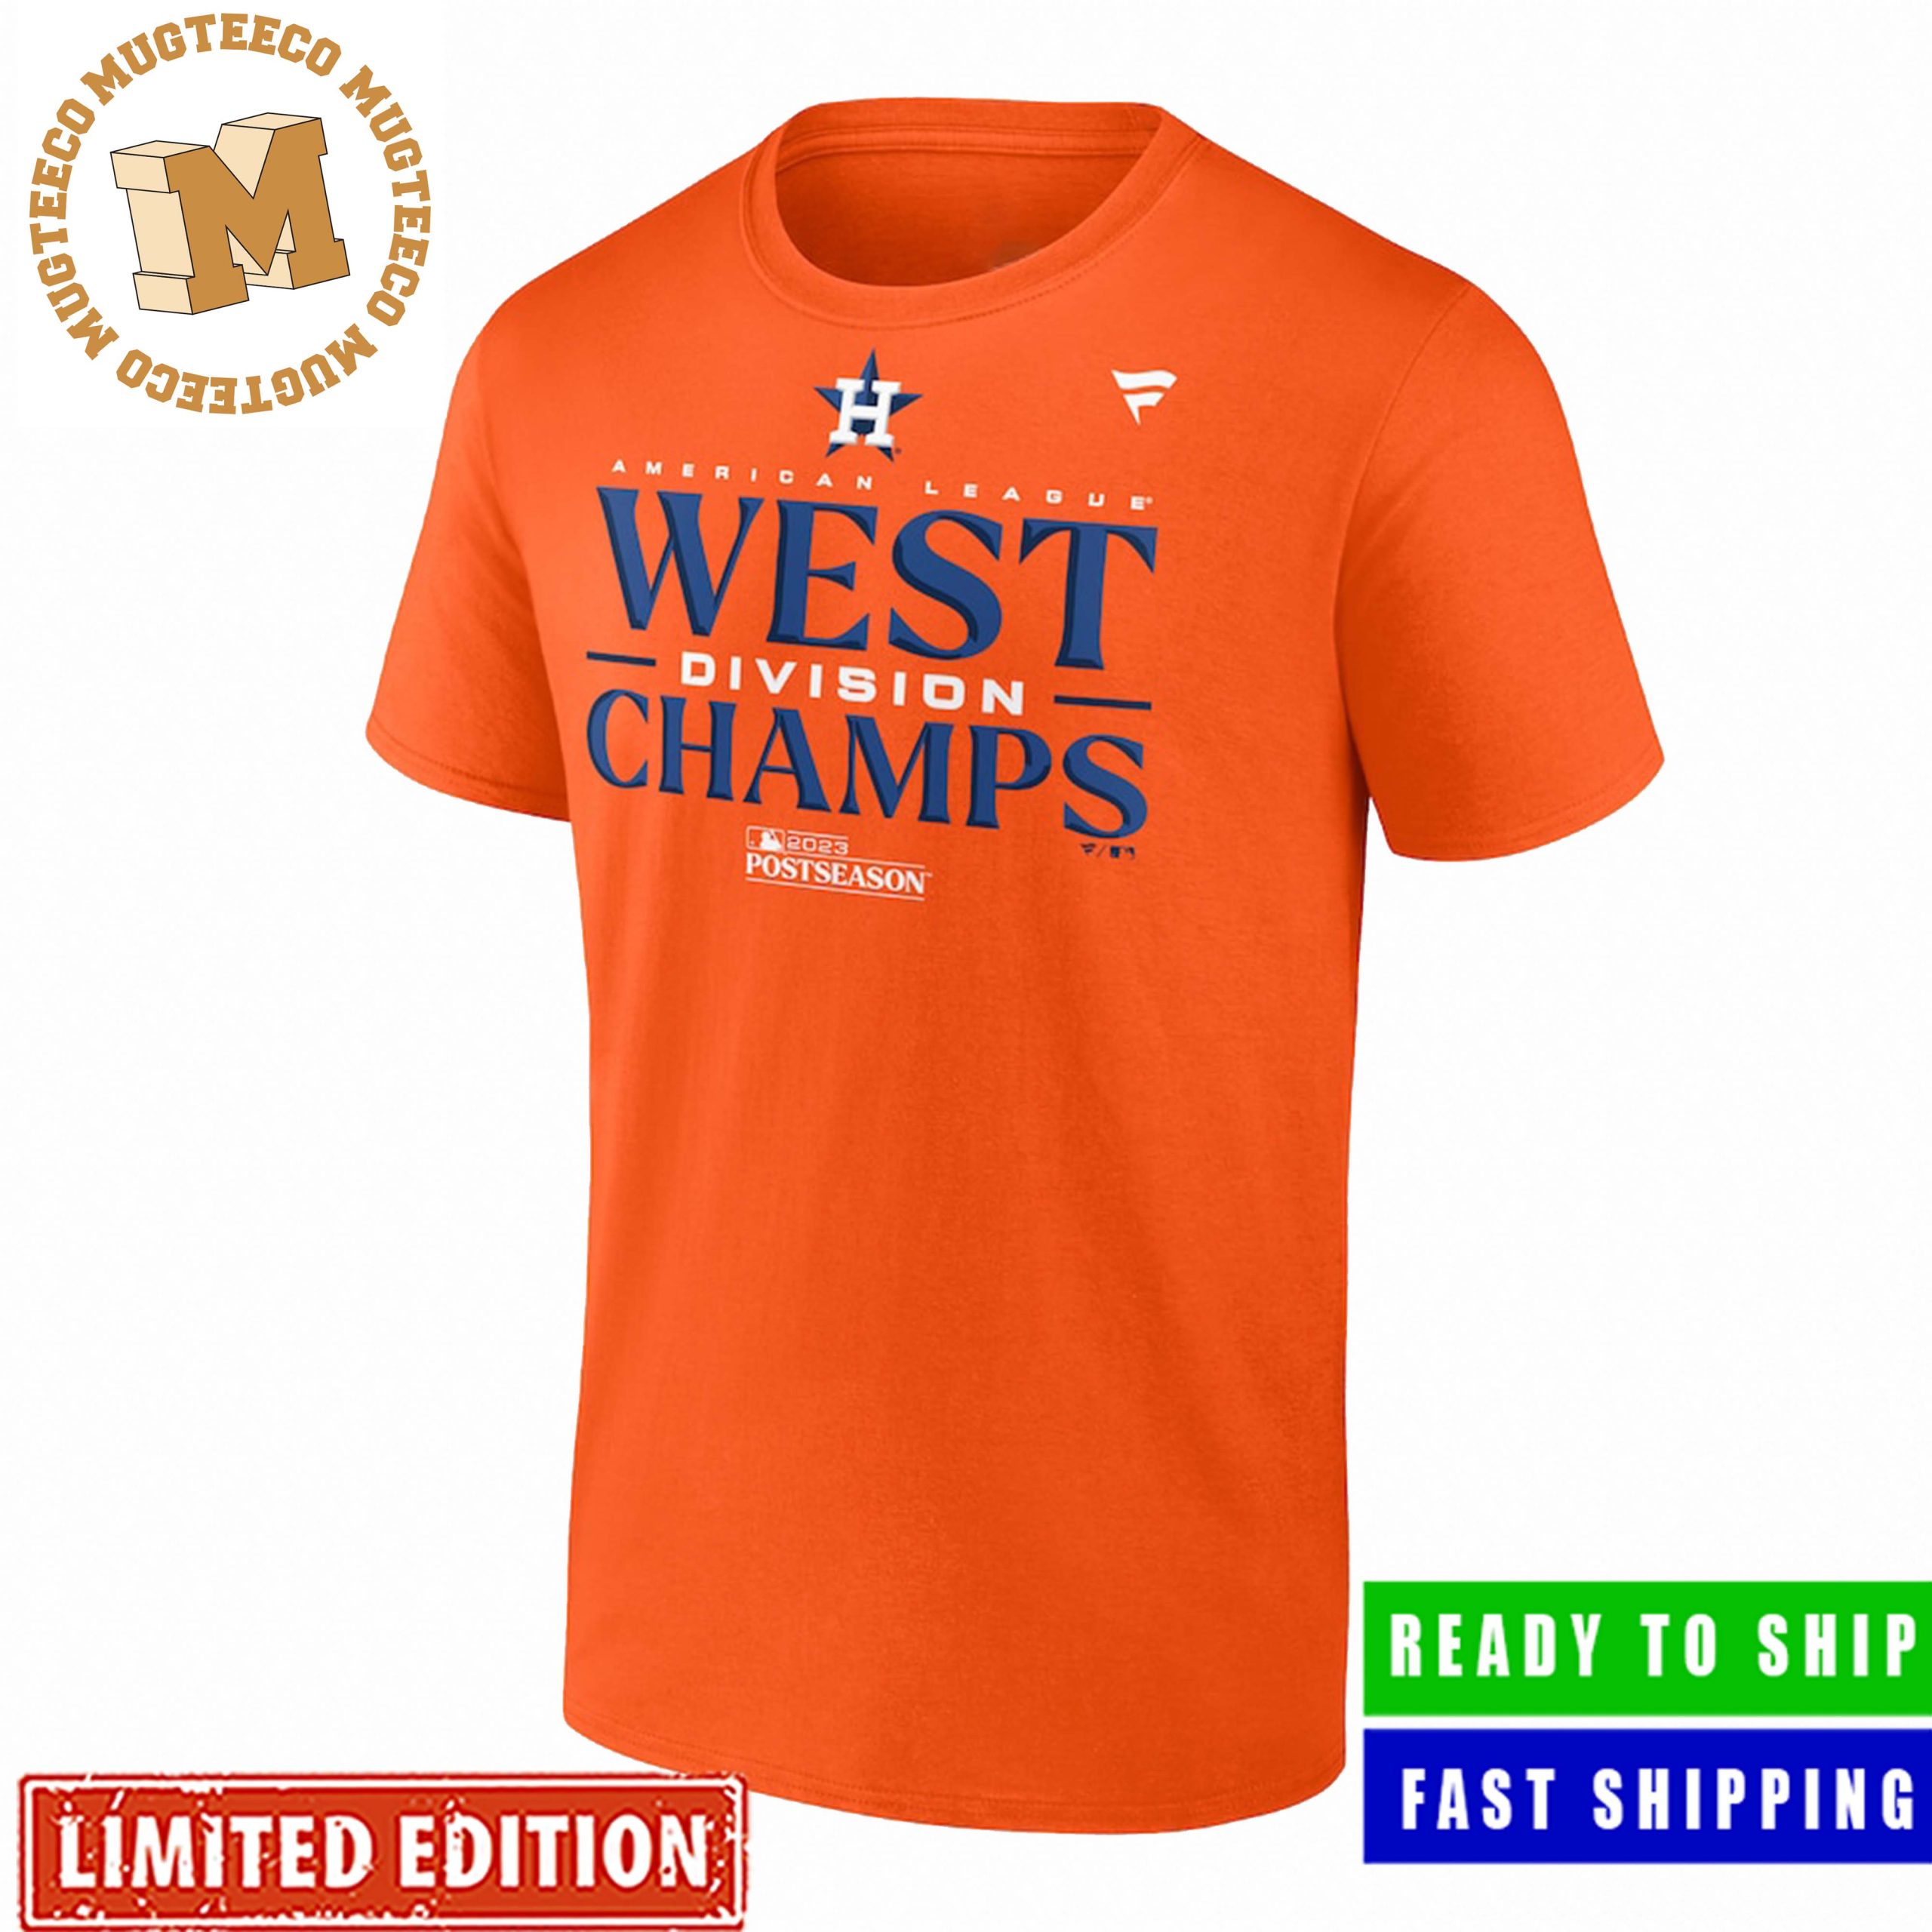 Houston Astros Shirt Limited Edition